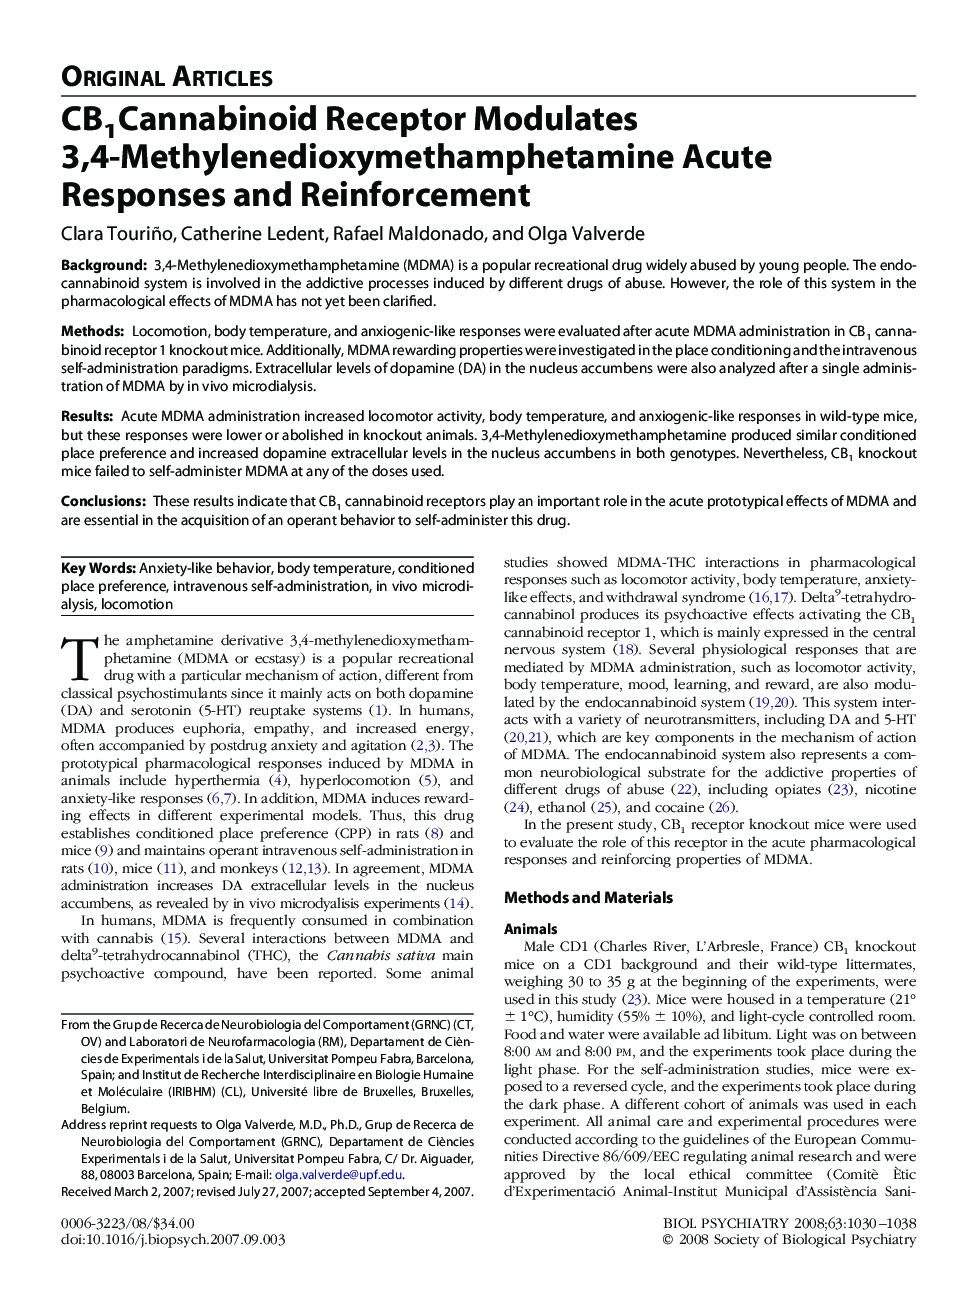 CB1Cannabinoid Receptor Modulates 3,4-Methylenedioxymethamphetamine Acute Responses and Reinforcement